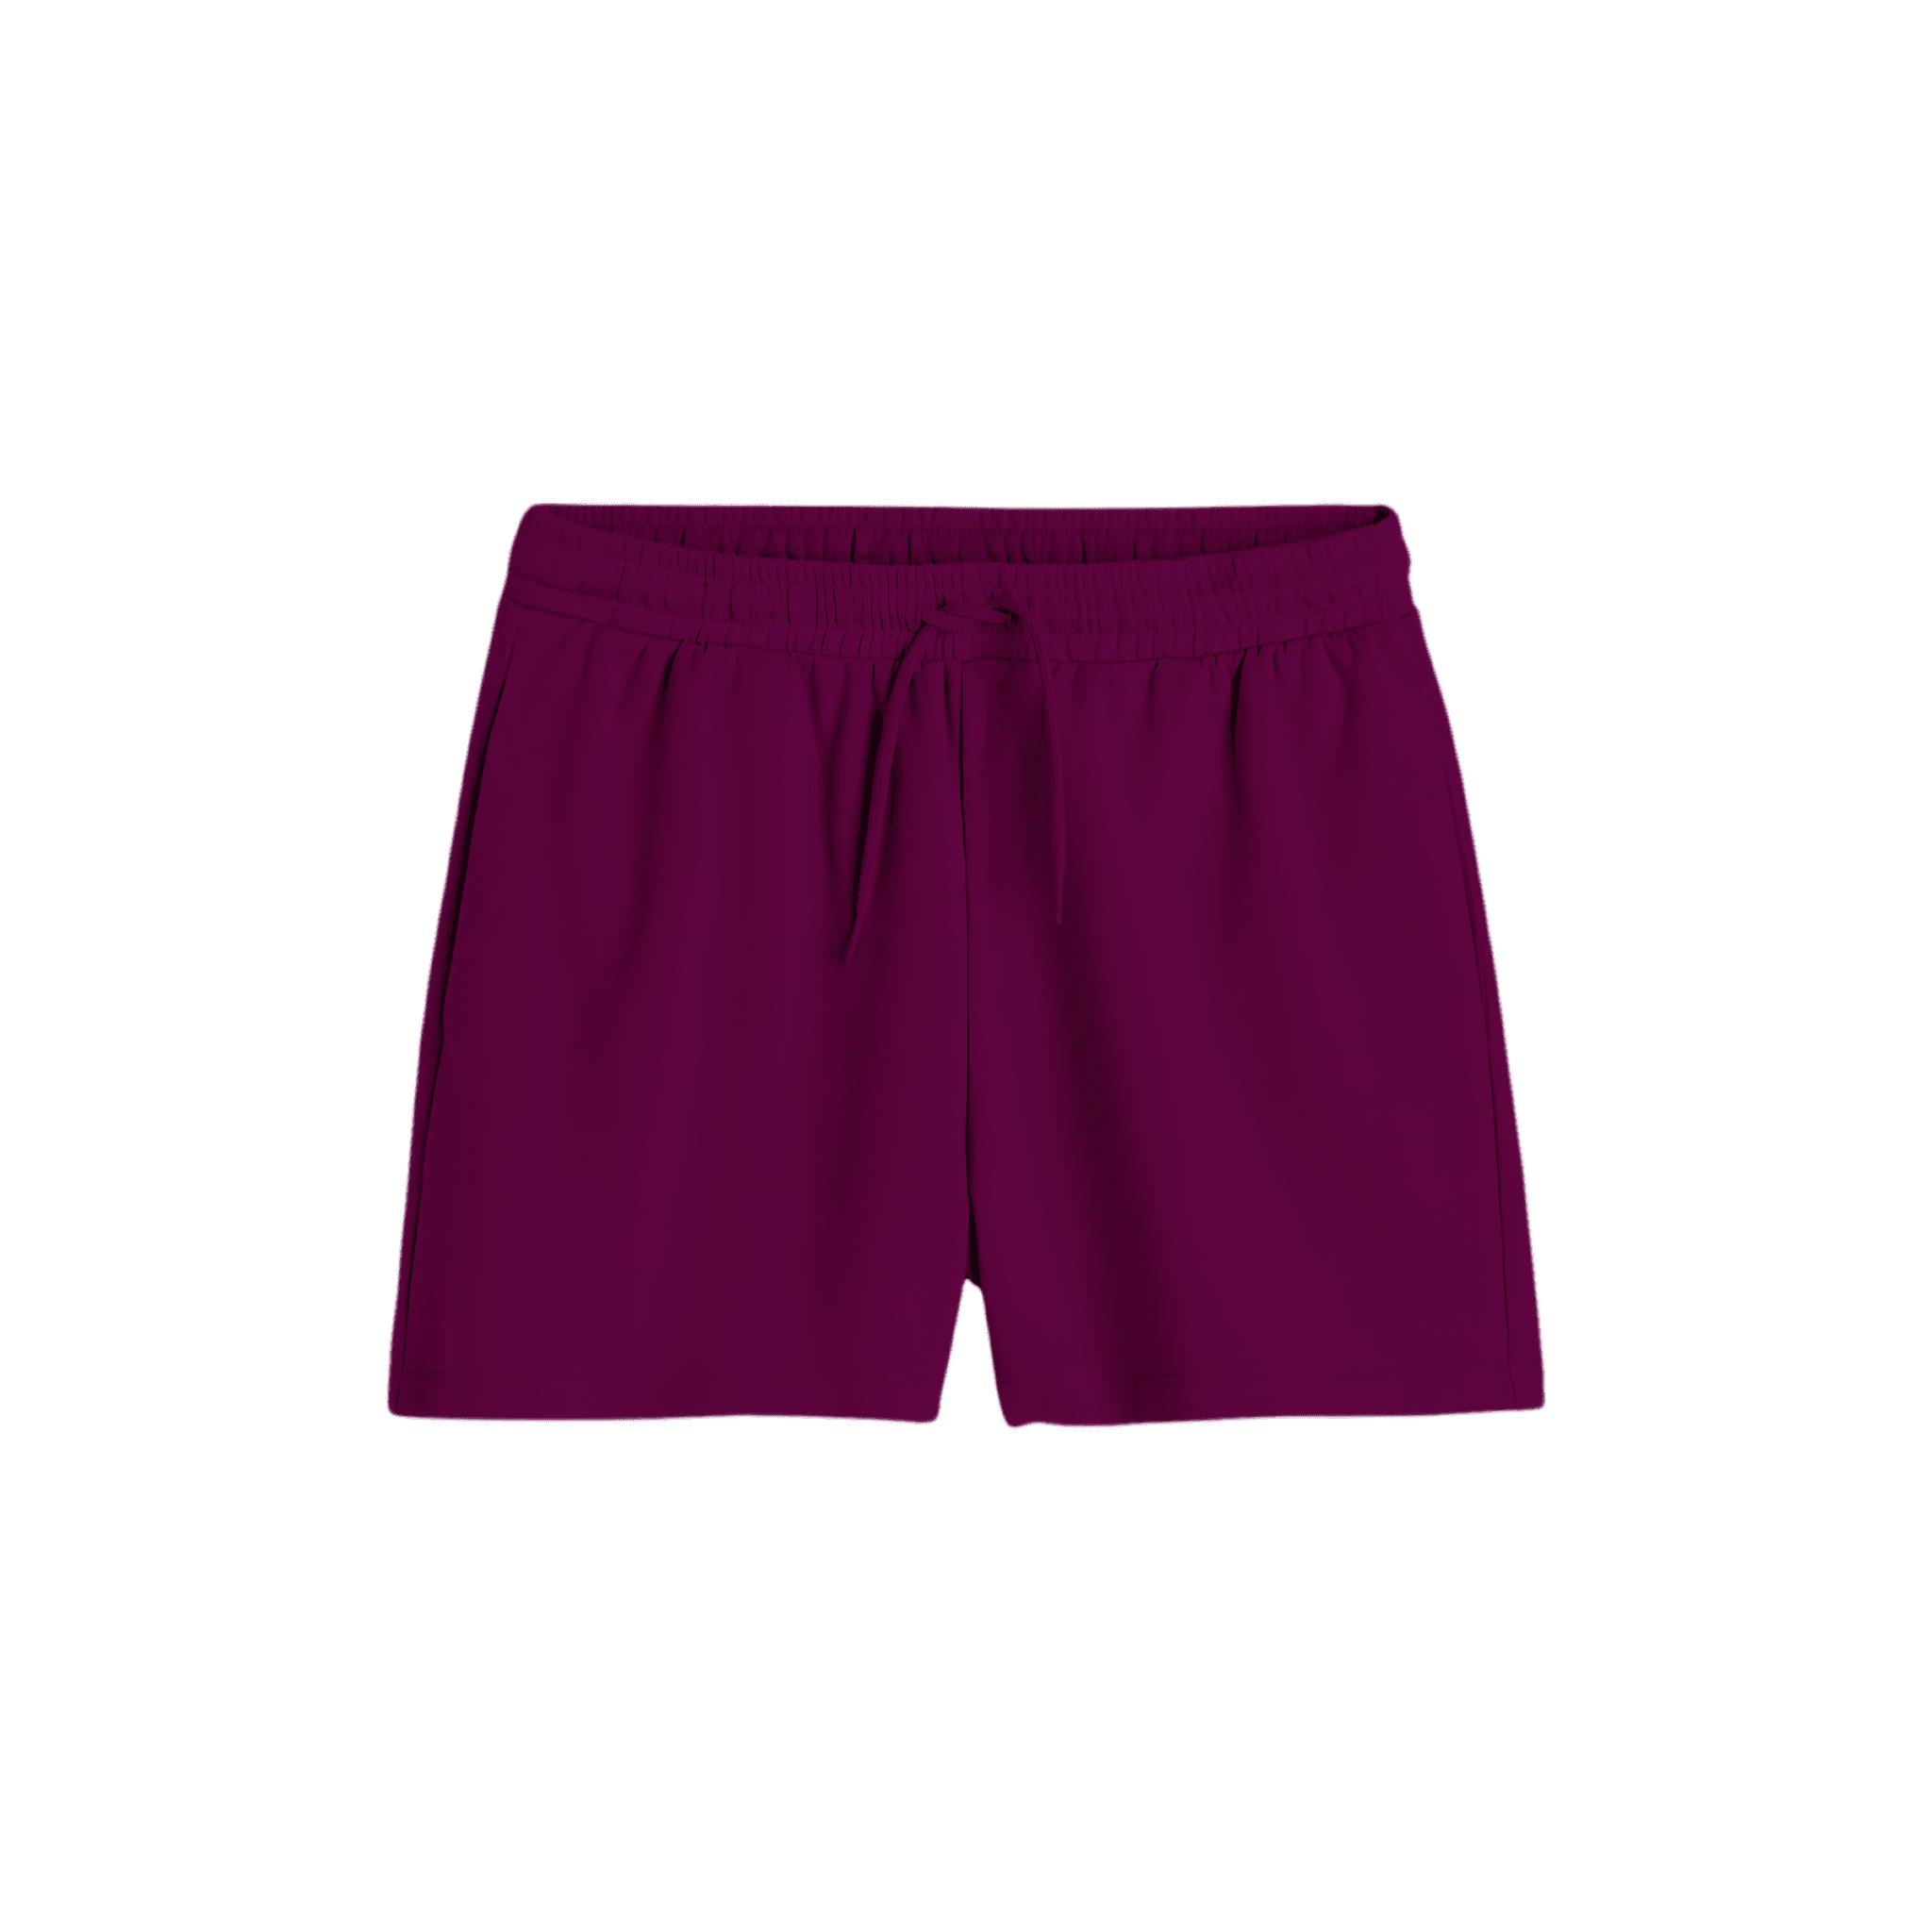 PLUM shorts